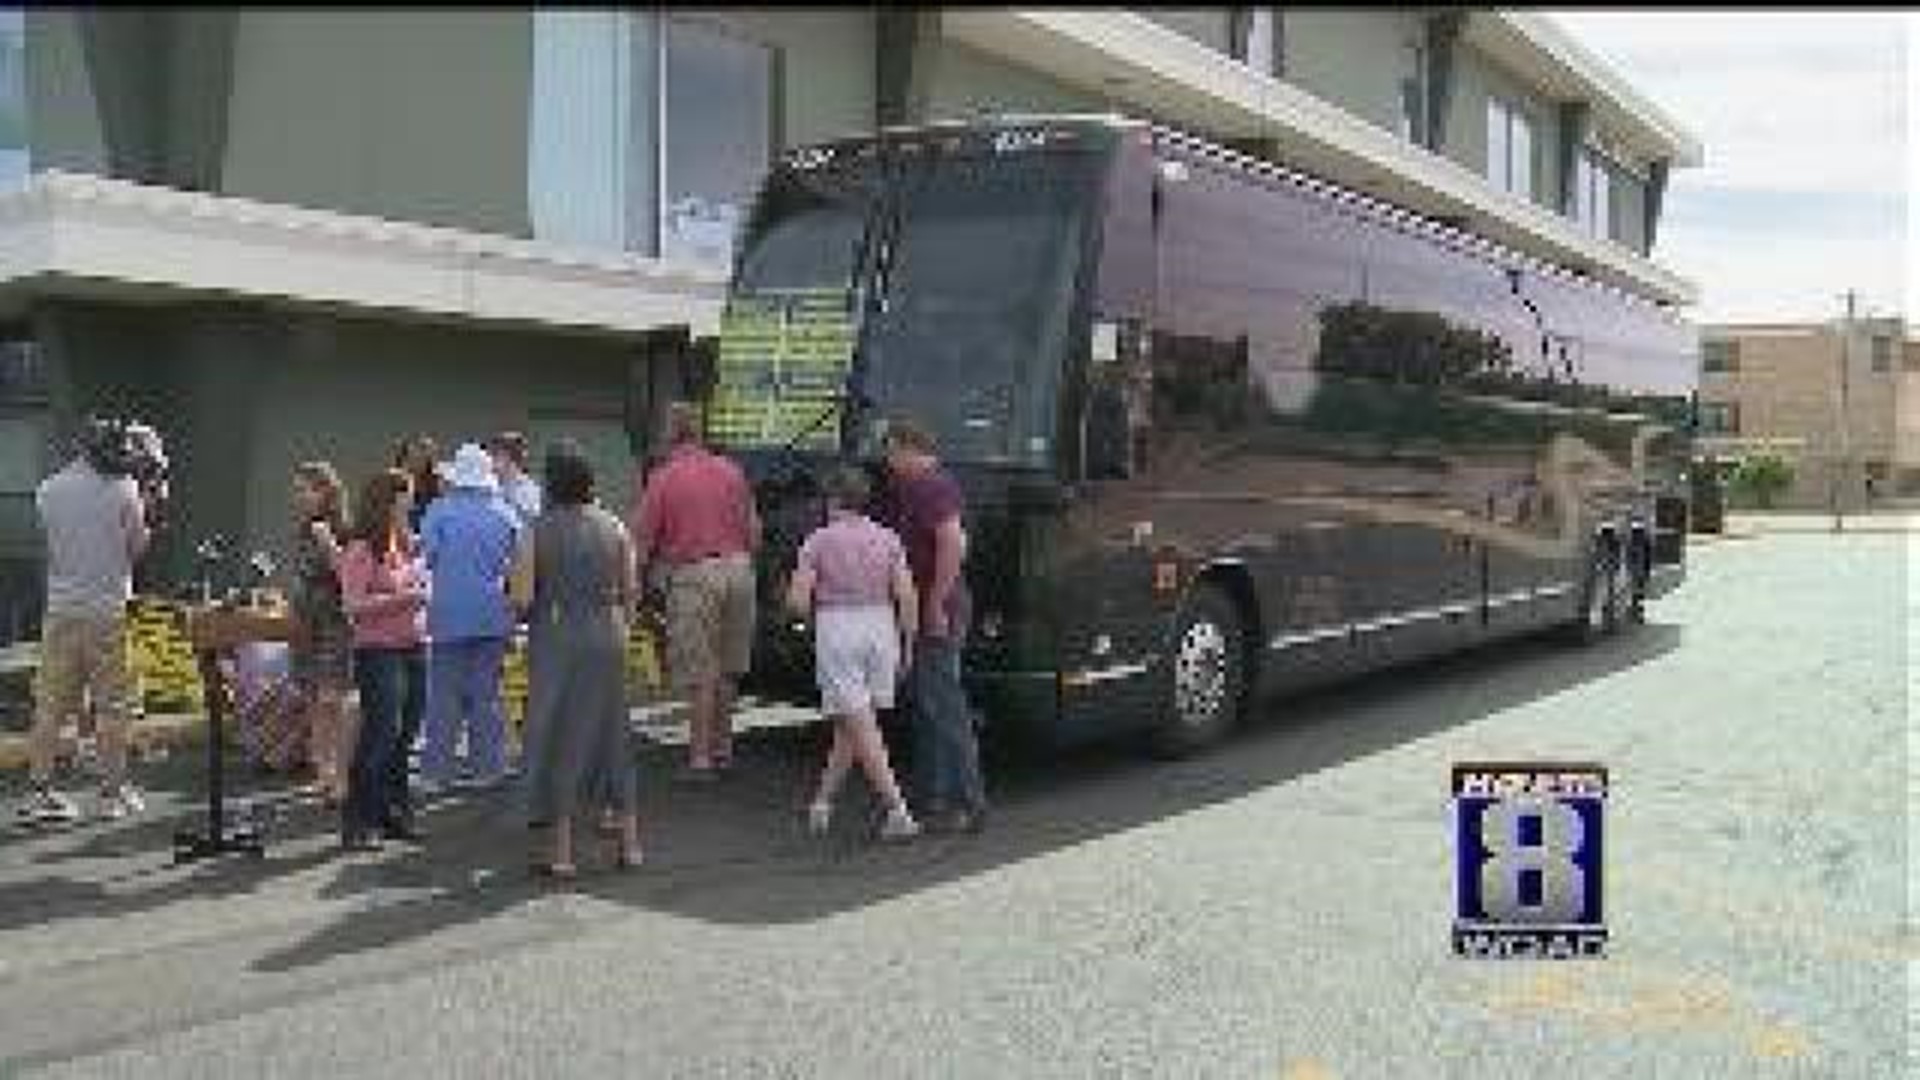 Democratic bus party stop in ahead of Romney visit